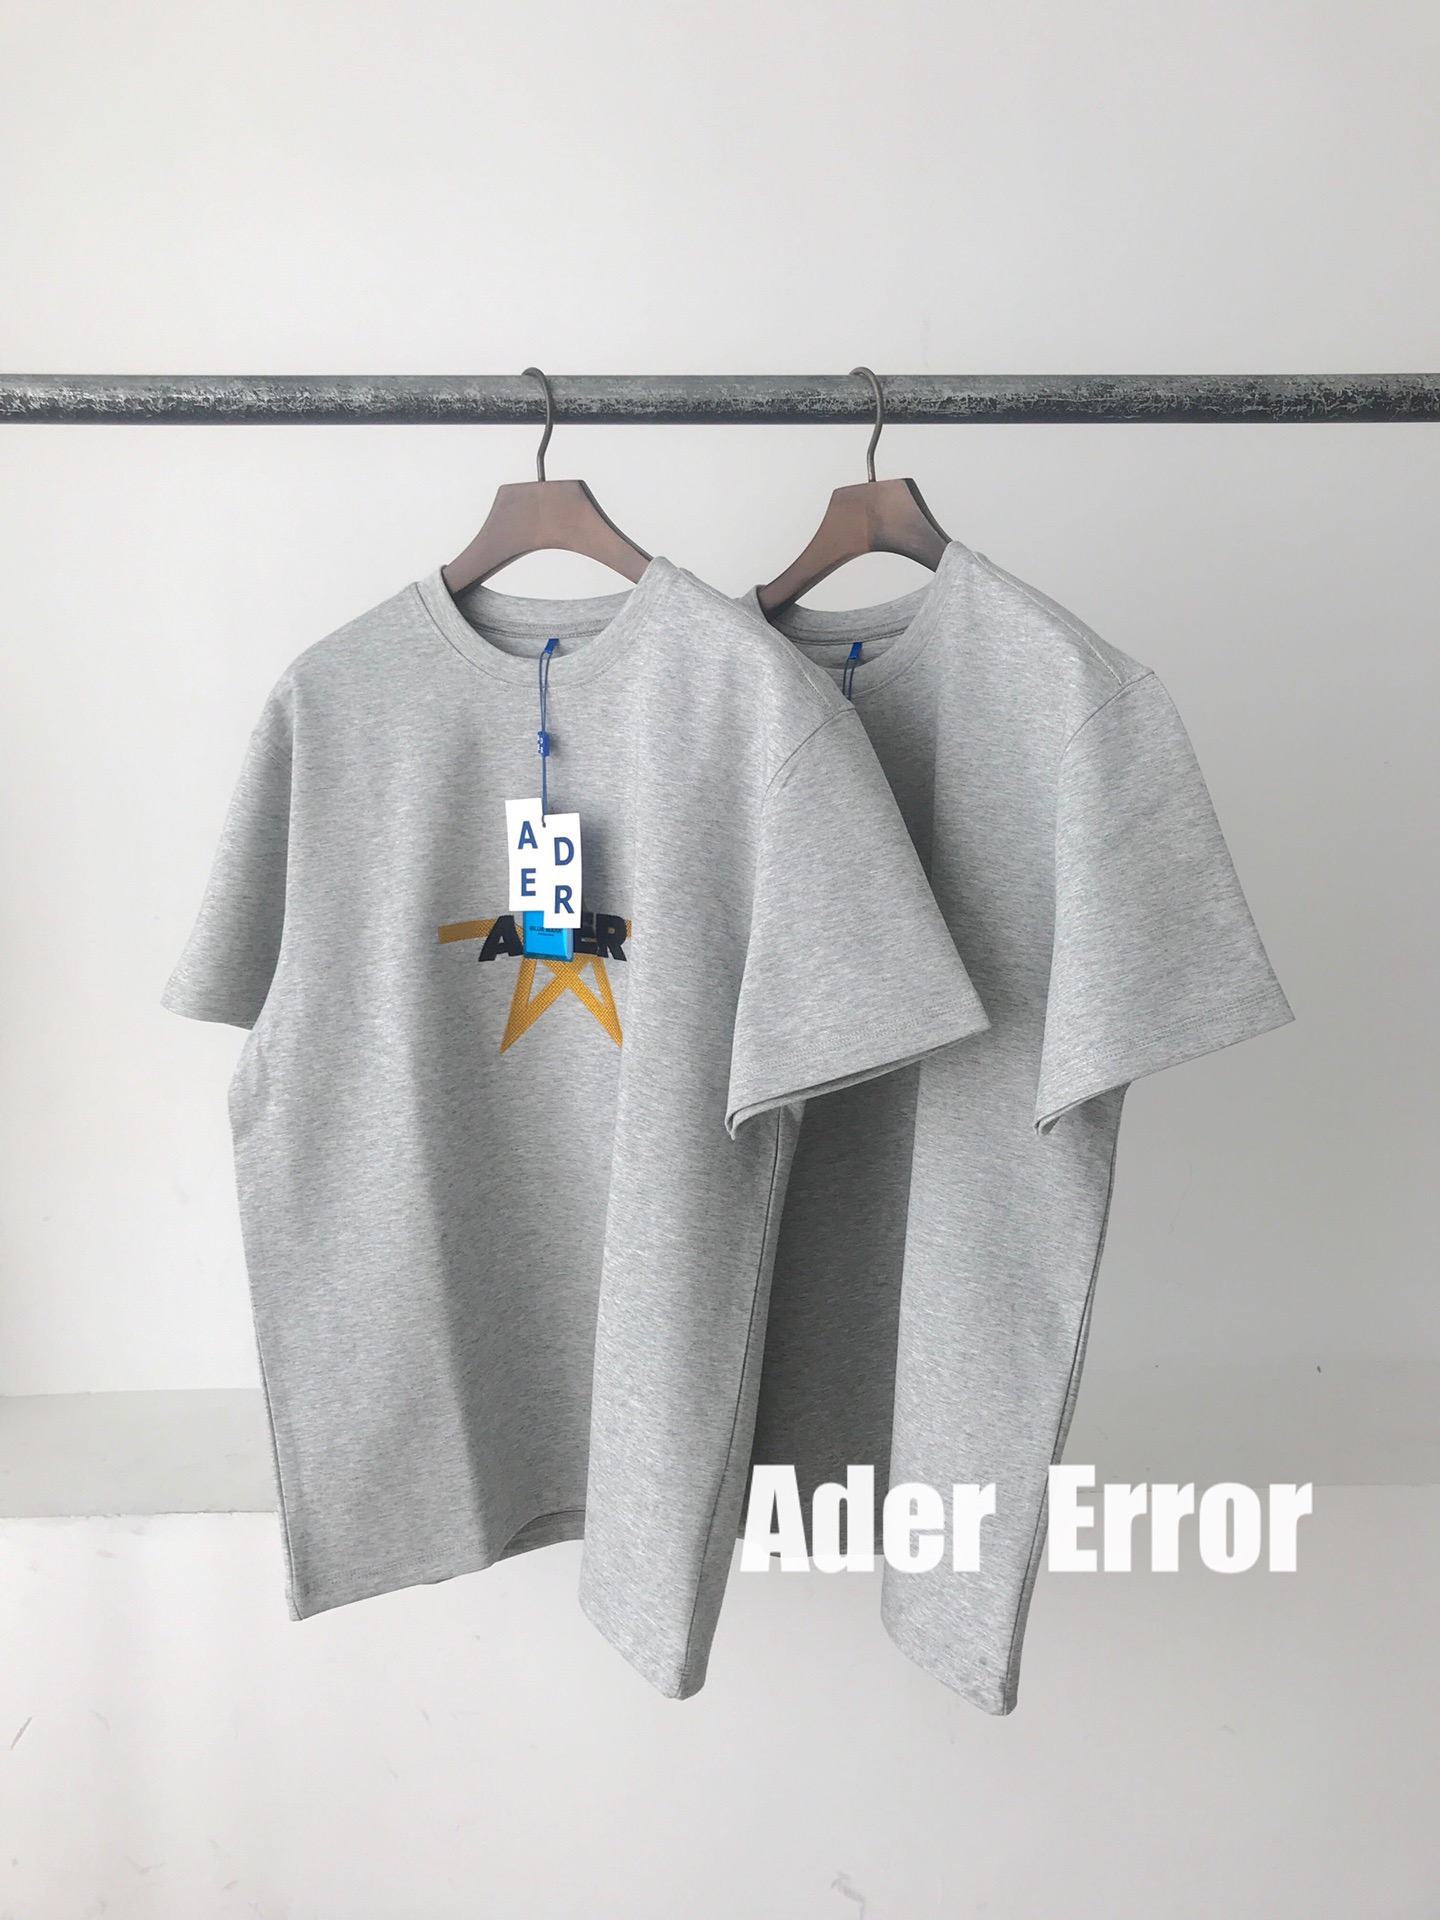 Ader error T-Shirt 22